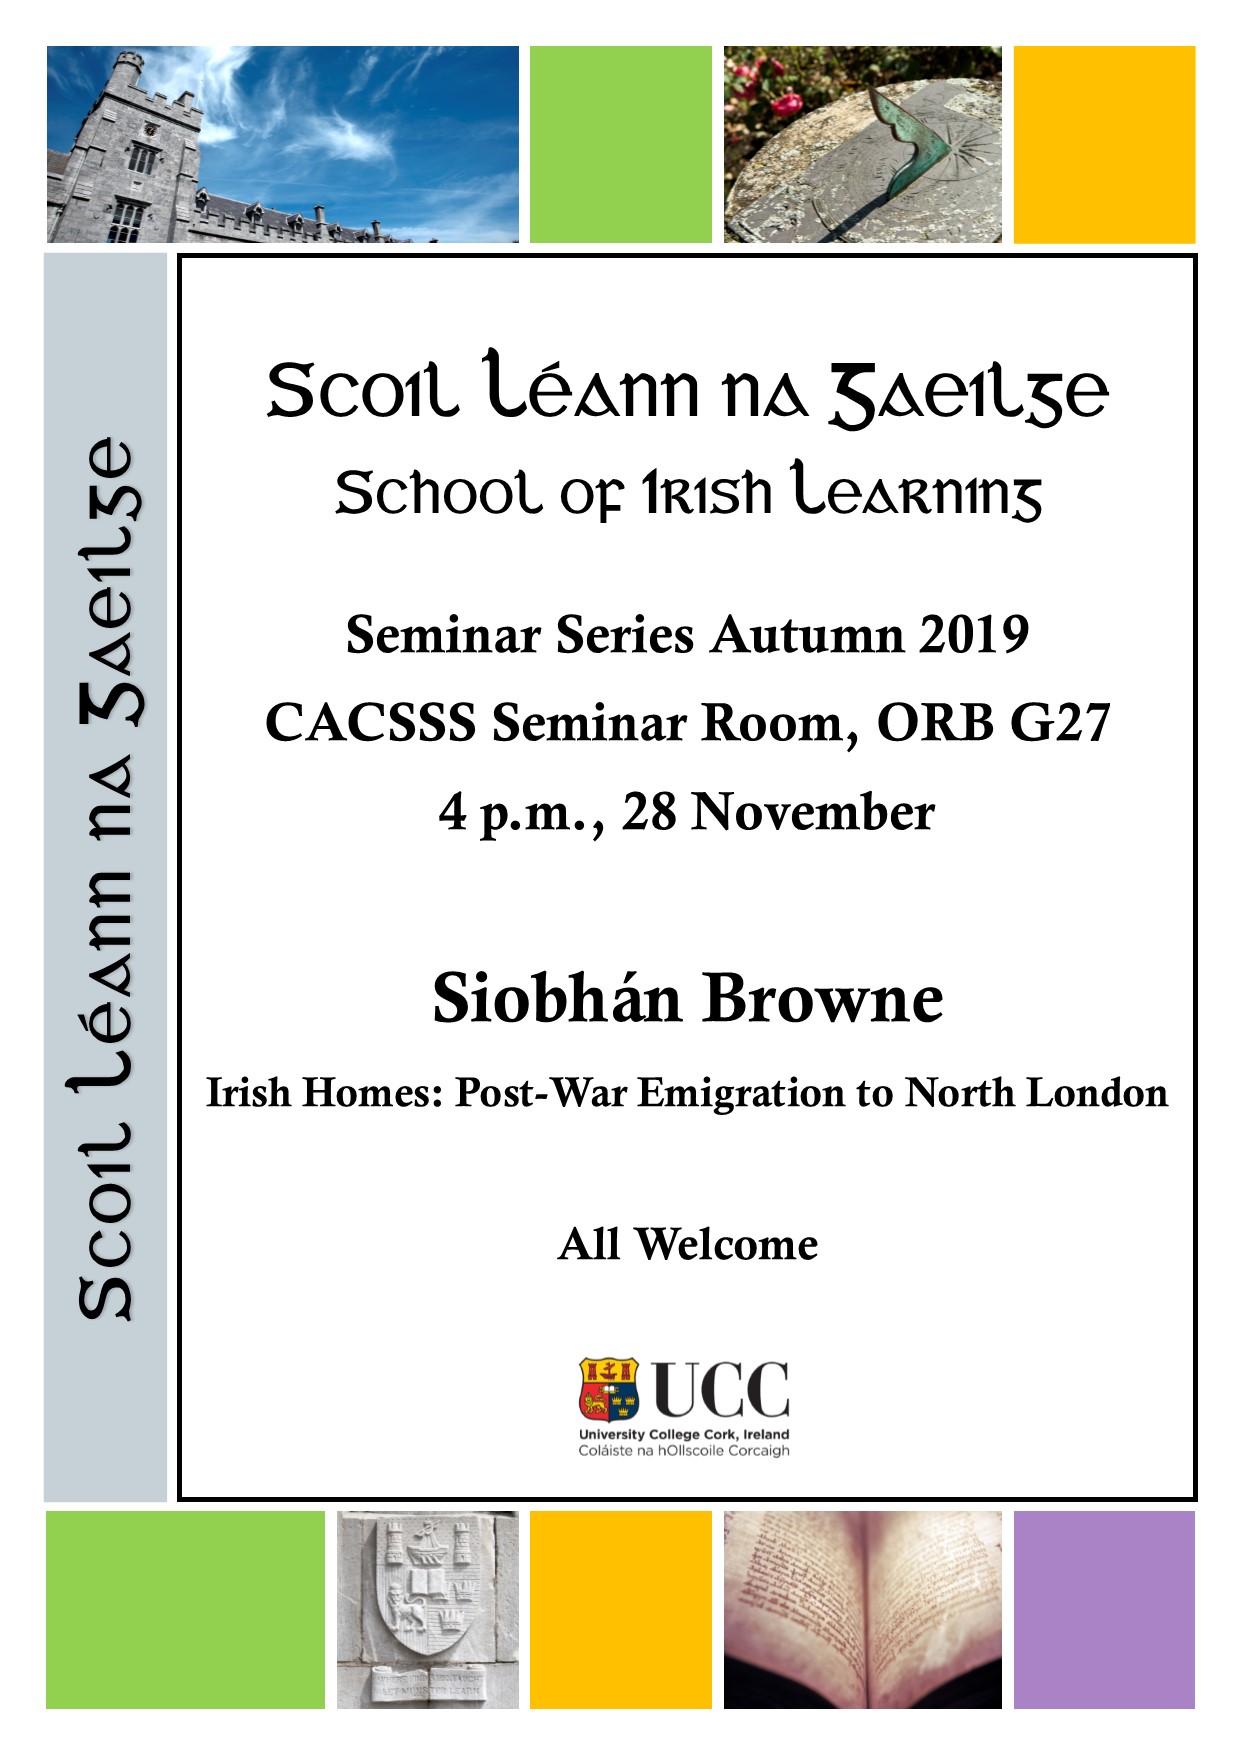 School of Irish Learning Seminar Series